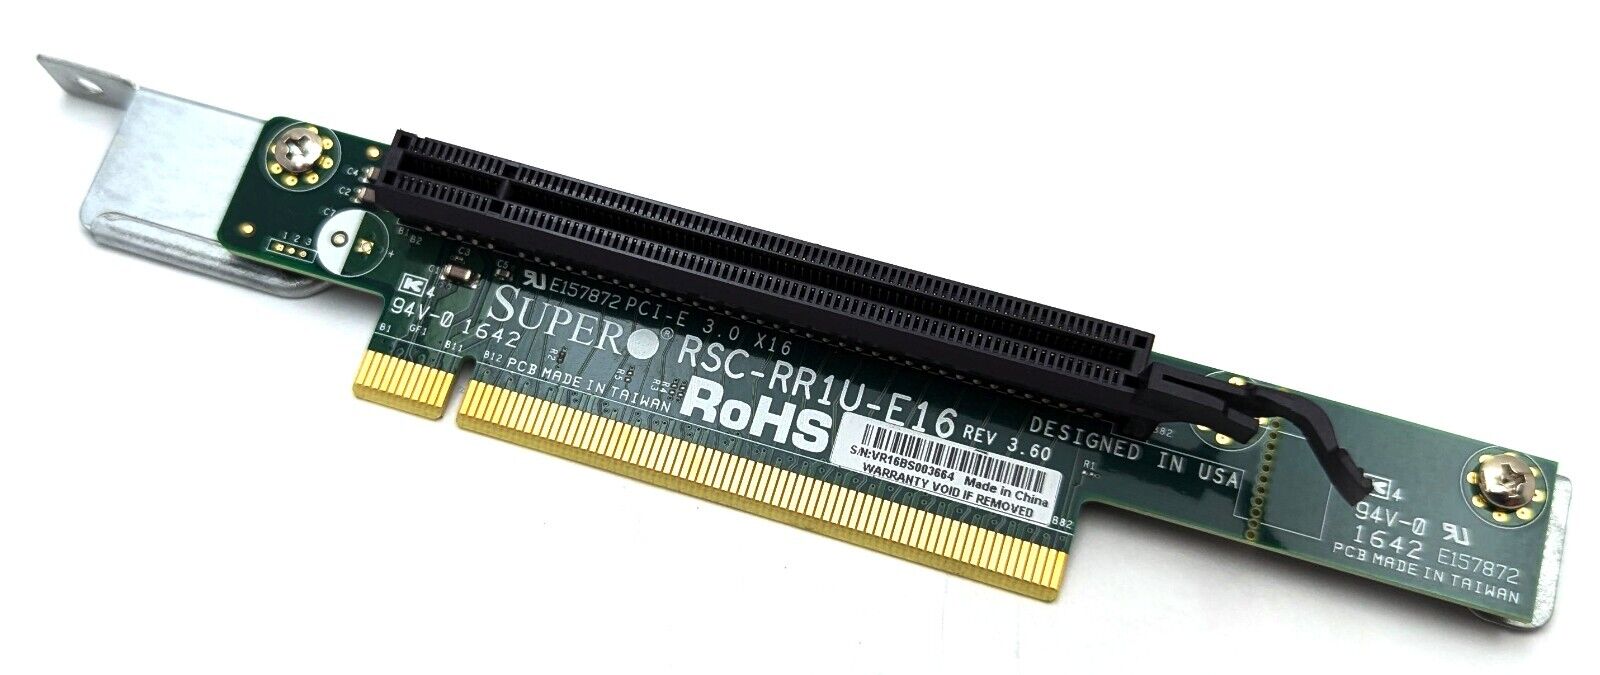 Supermicro RSC-RR1U-E16 1U PCI-E 3.0 x16 Riser Card w/ Metal Mounting Bracket